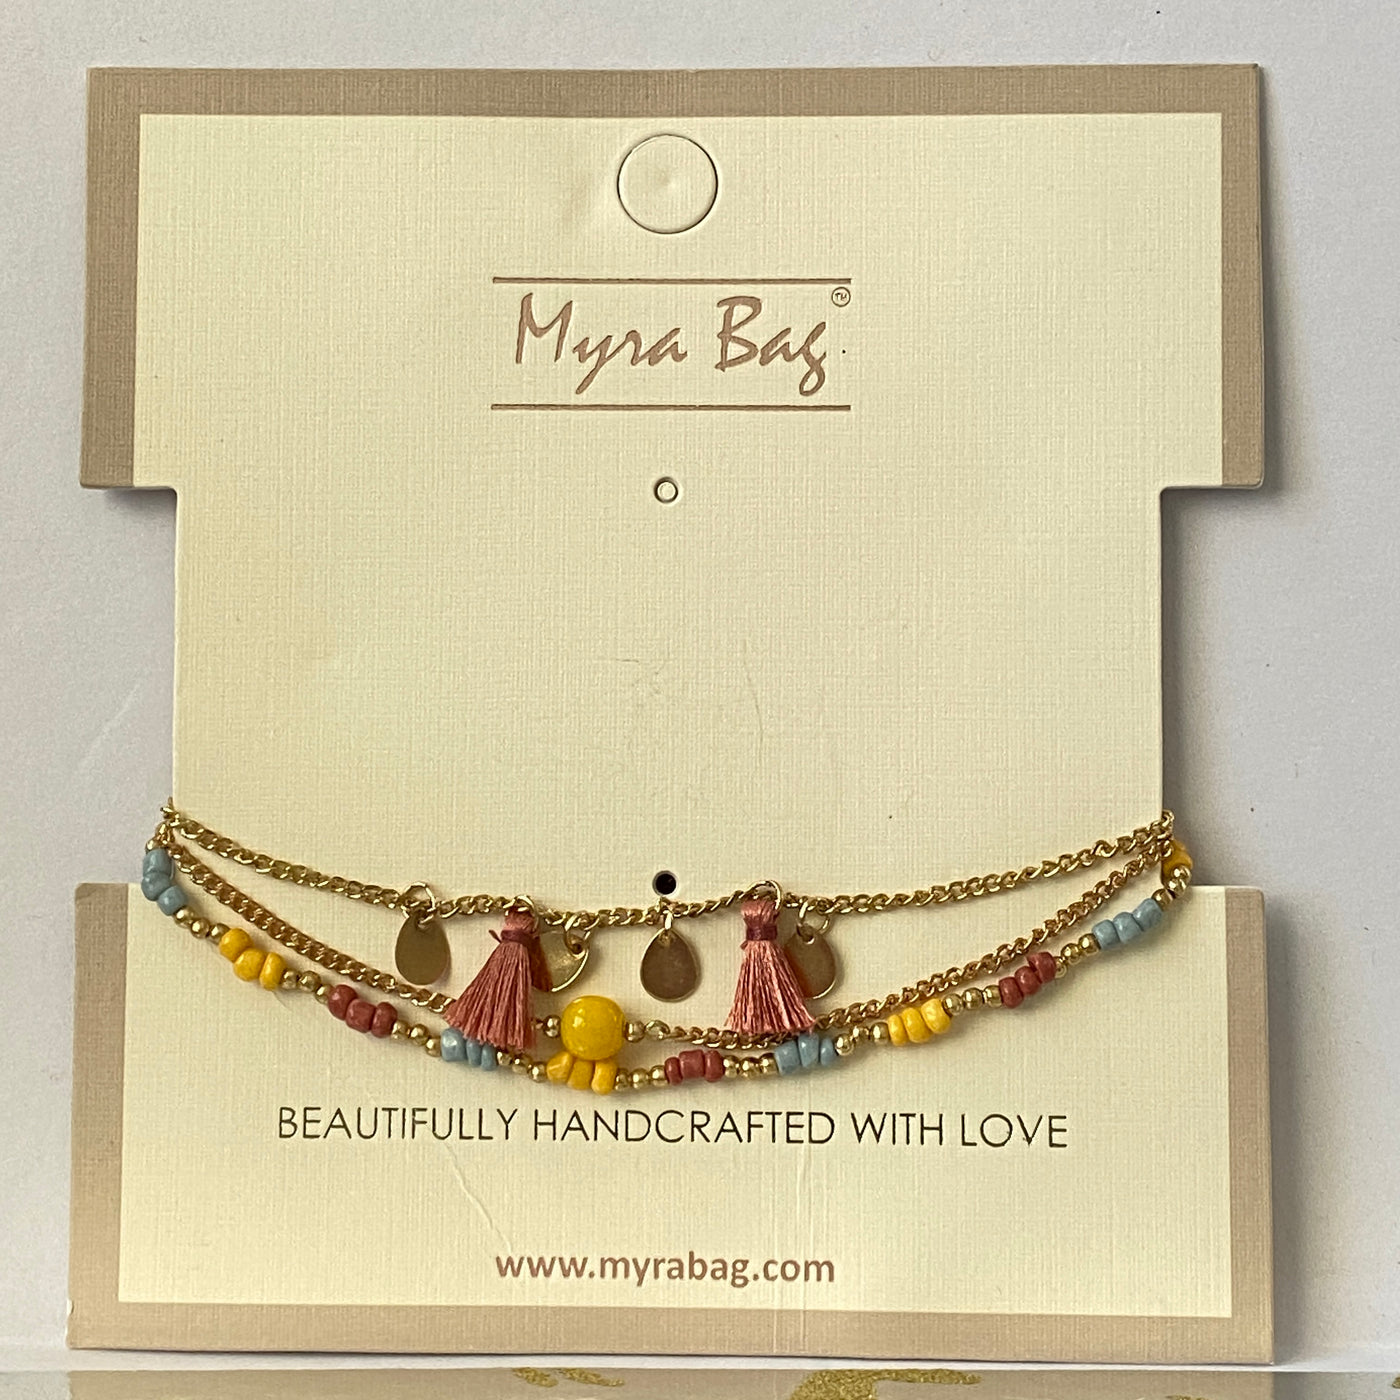 Myra Jewelry Collection